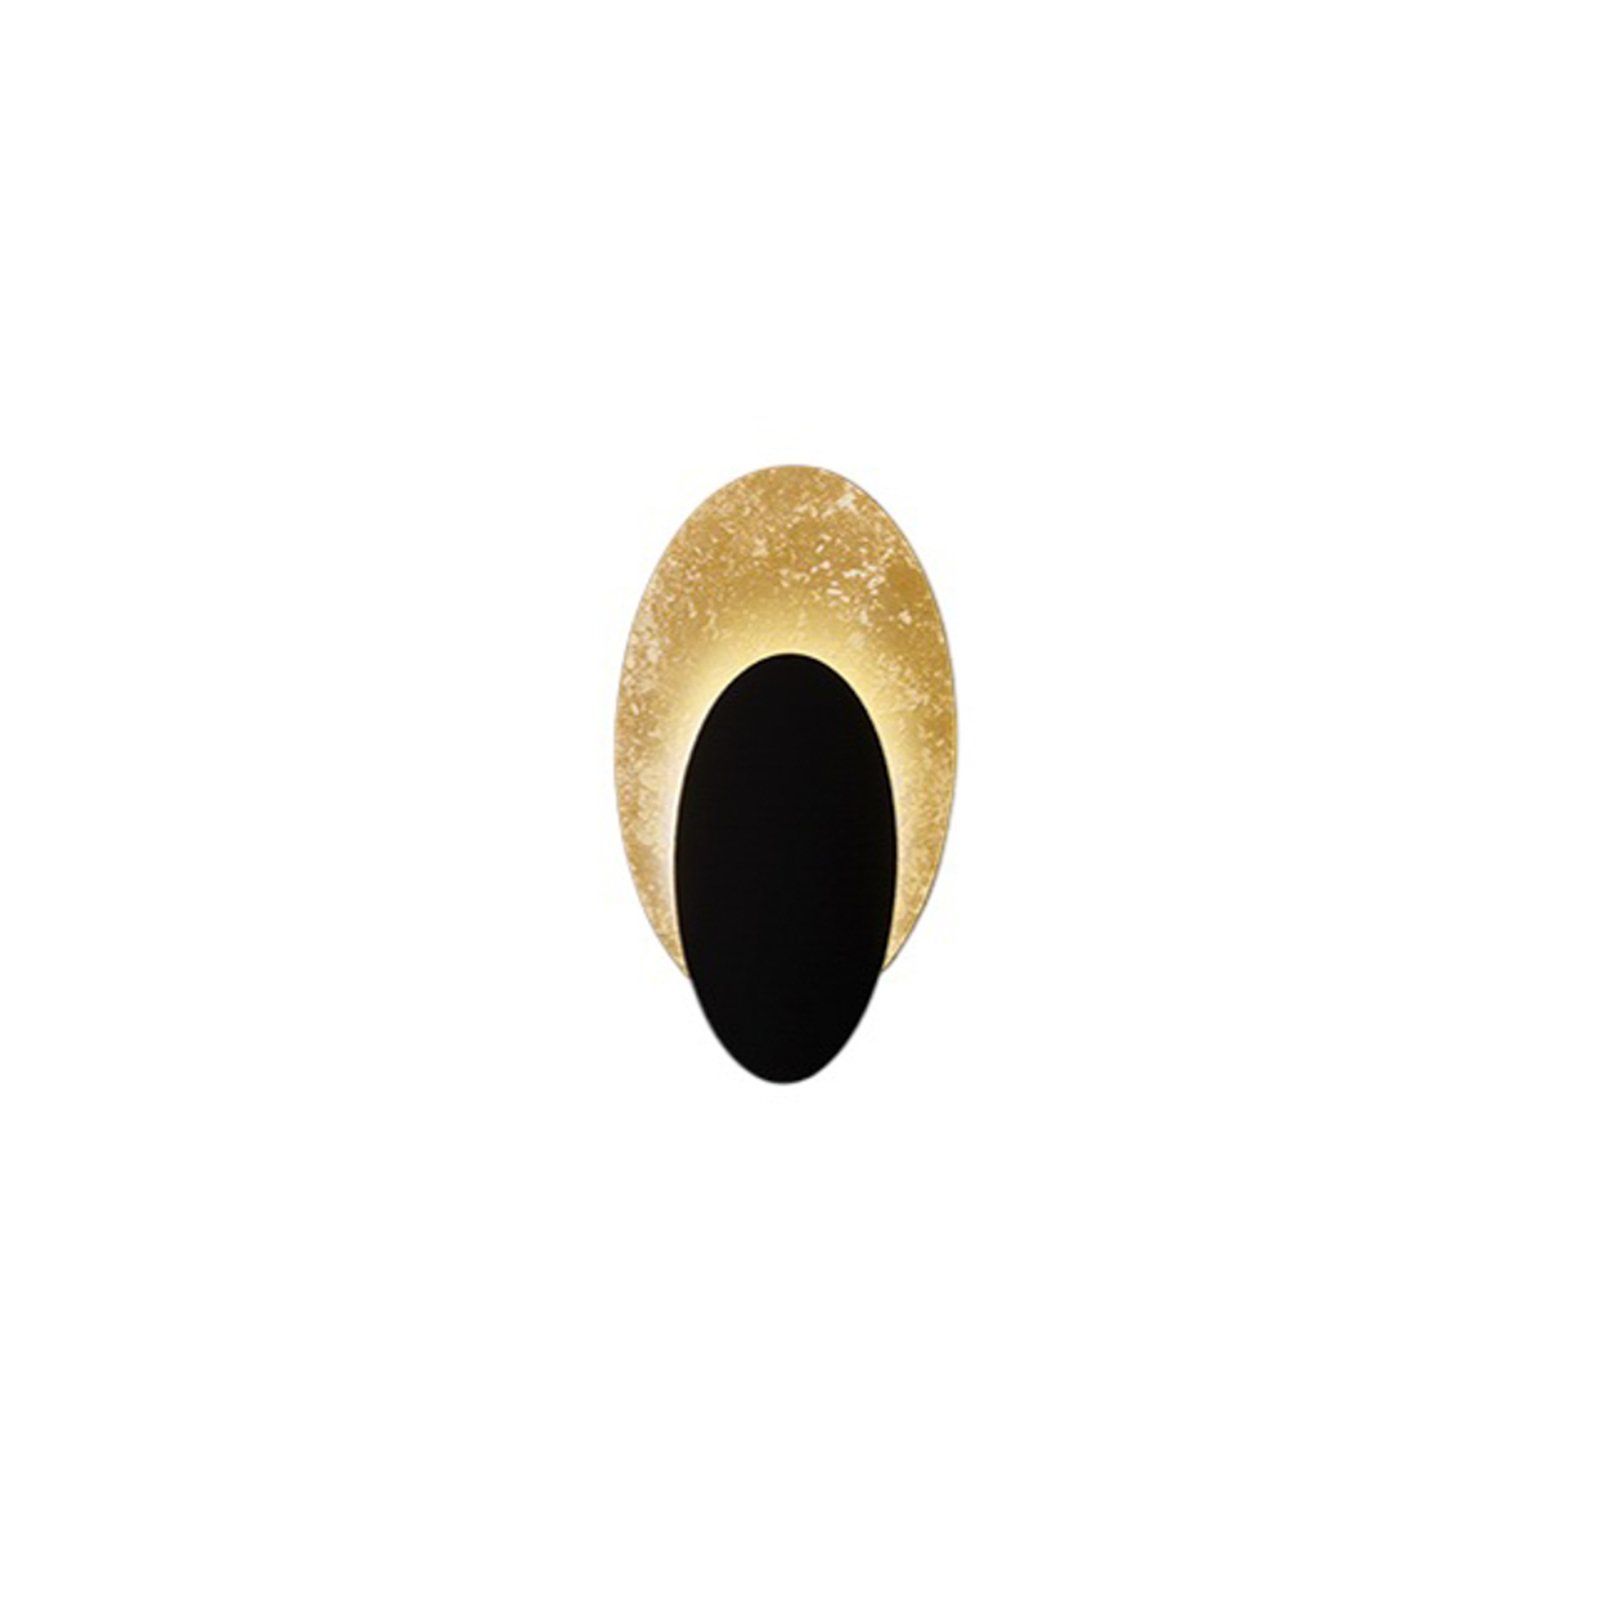 ICONE Masai nástěnné svítidlo 927 Triac 50x28 zlatá/černá